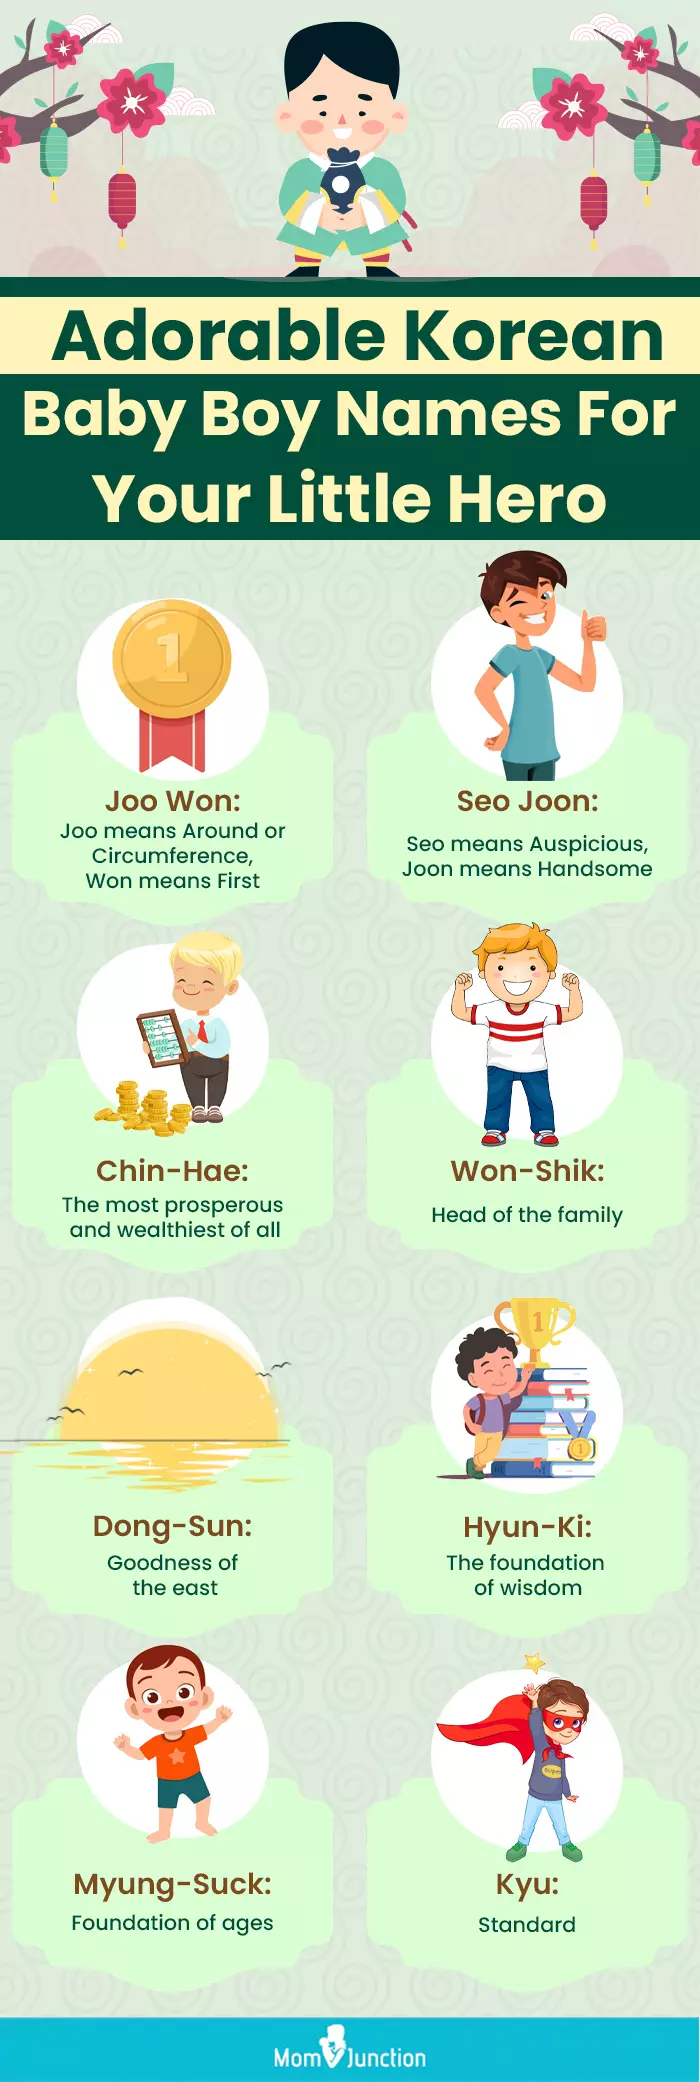 adorable korean baby boy names for your little hero (infographic)